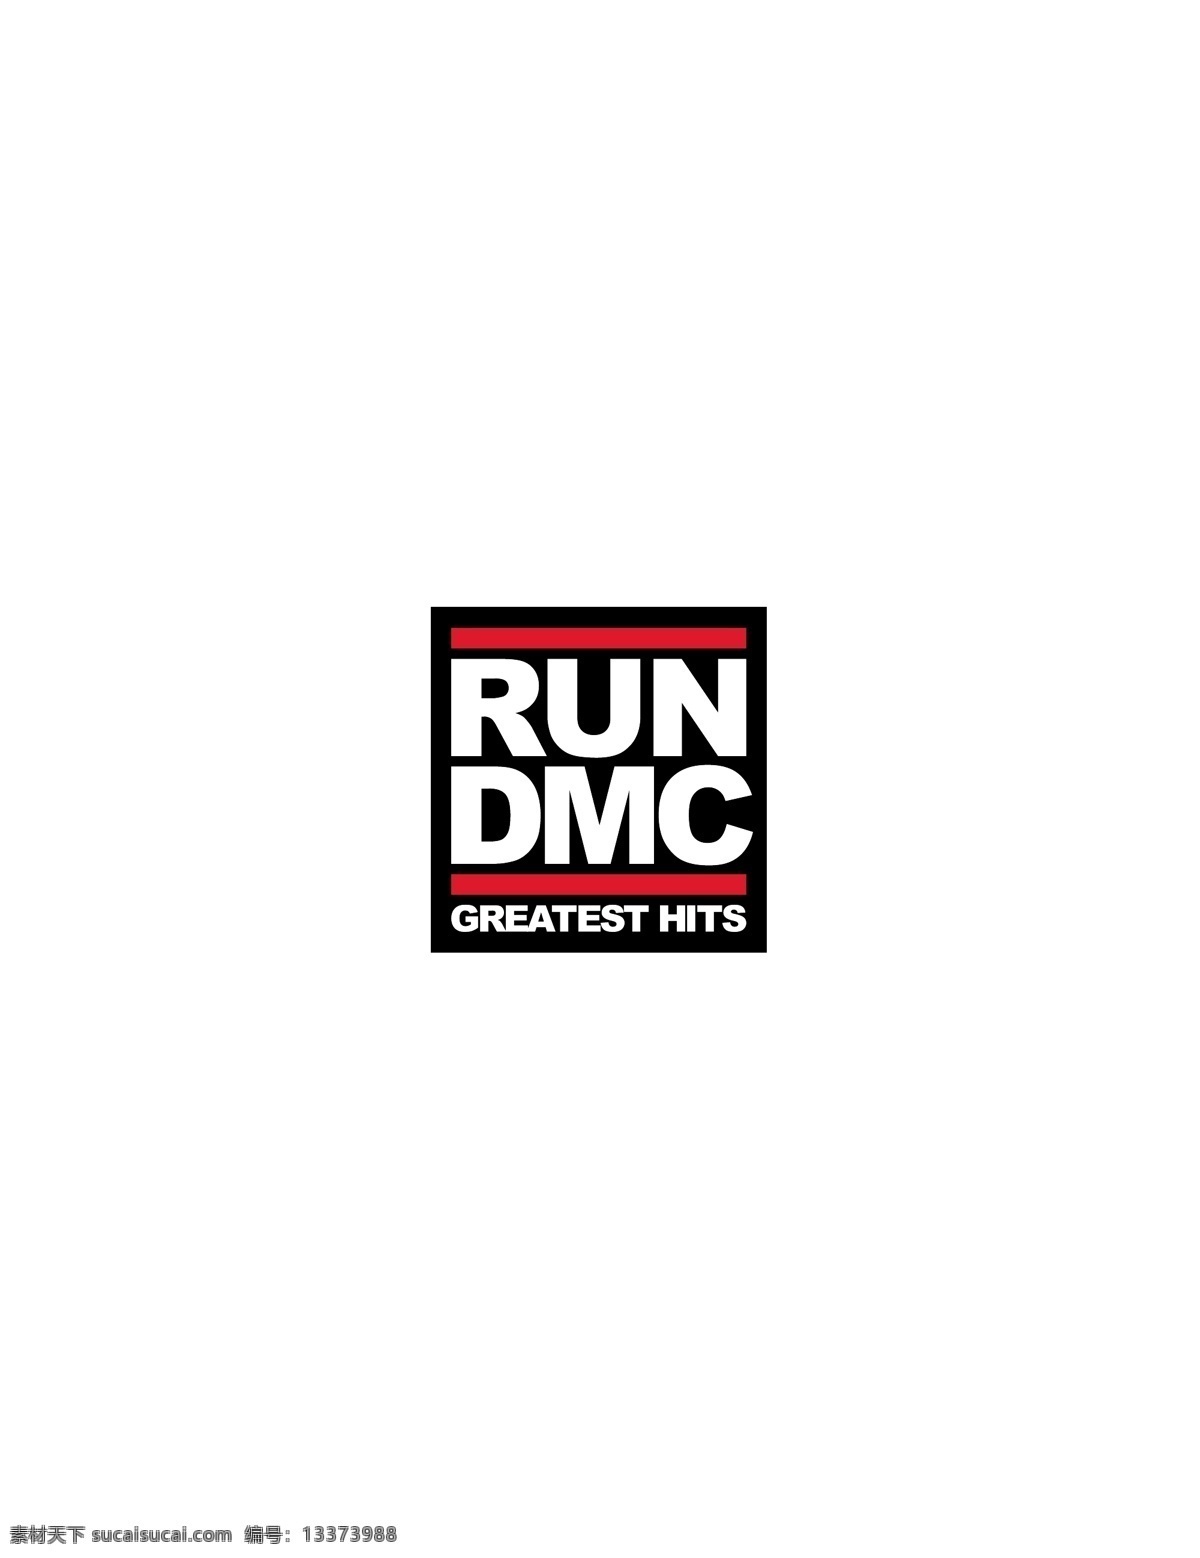 logo大全 logo 设计欣赏 商业矢量 矢量下载 run dmc greatest hits 标志设计 欣赏 网页矢量 矢量图 其他矢量图